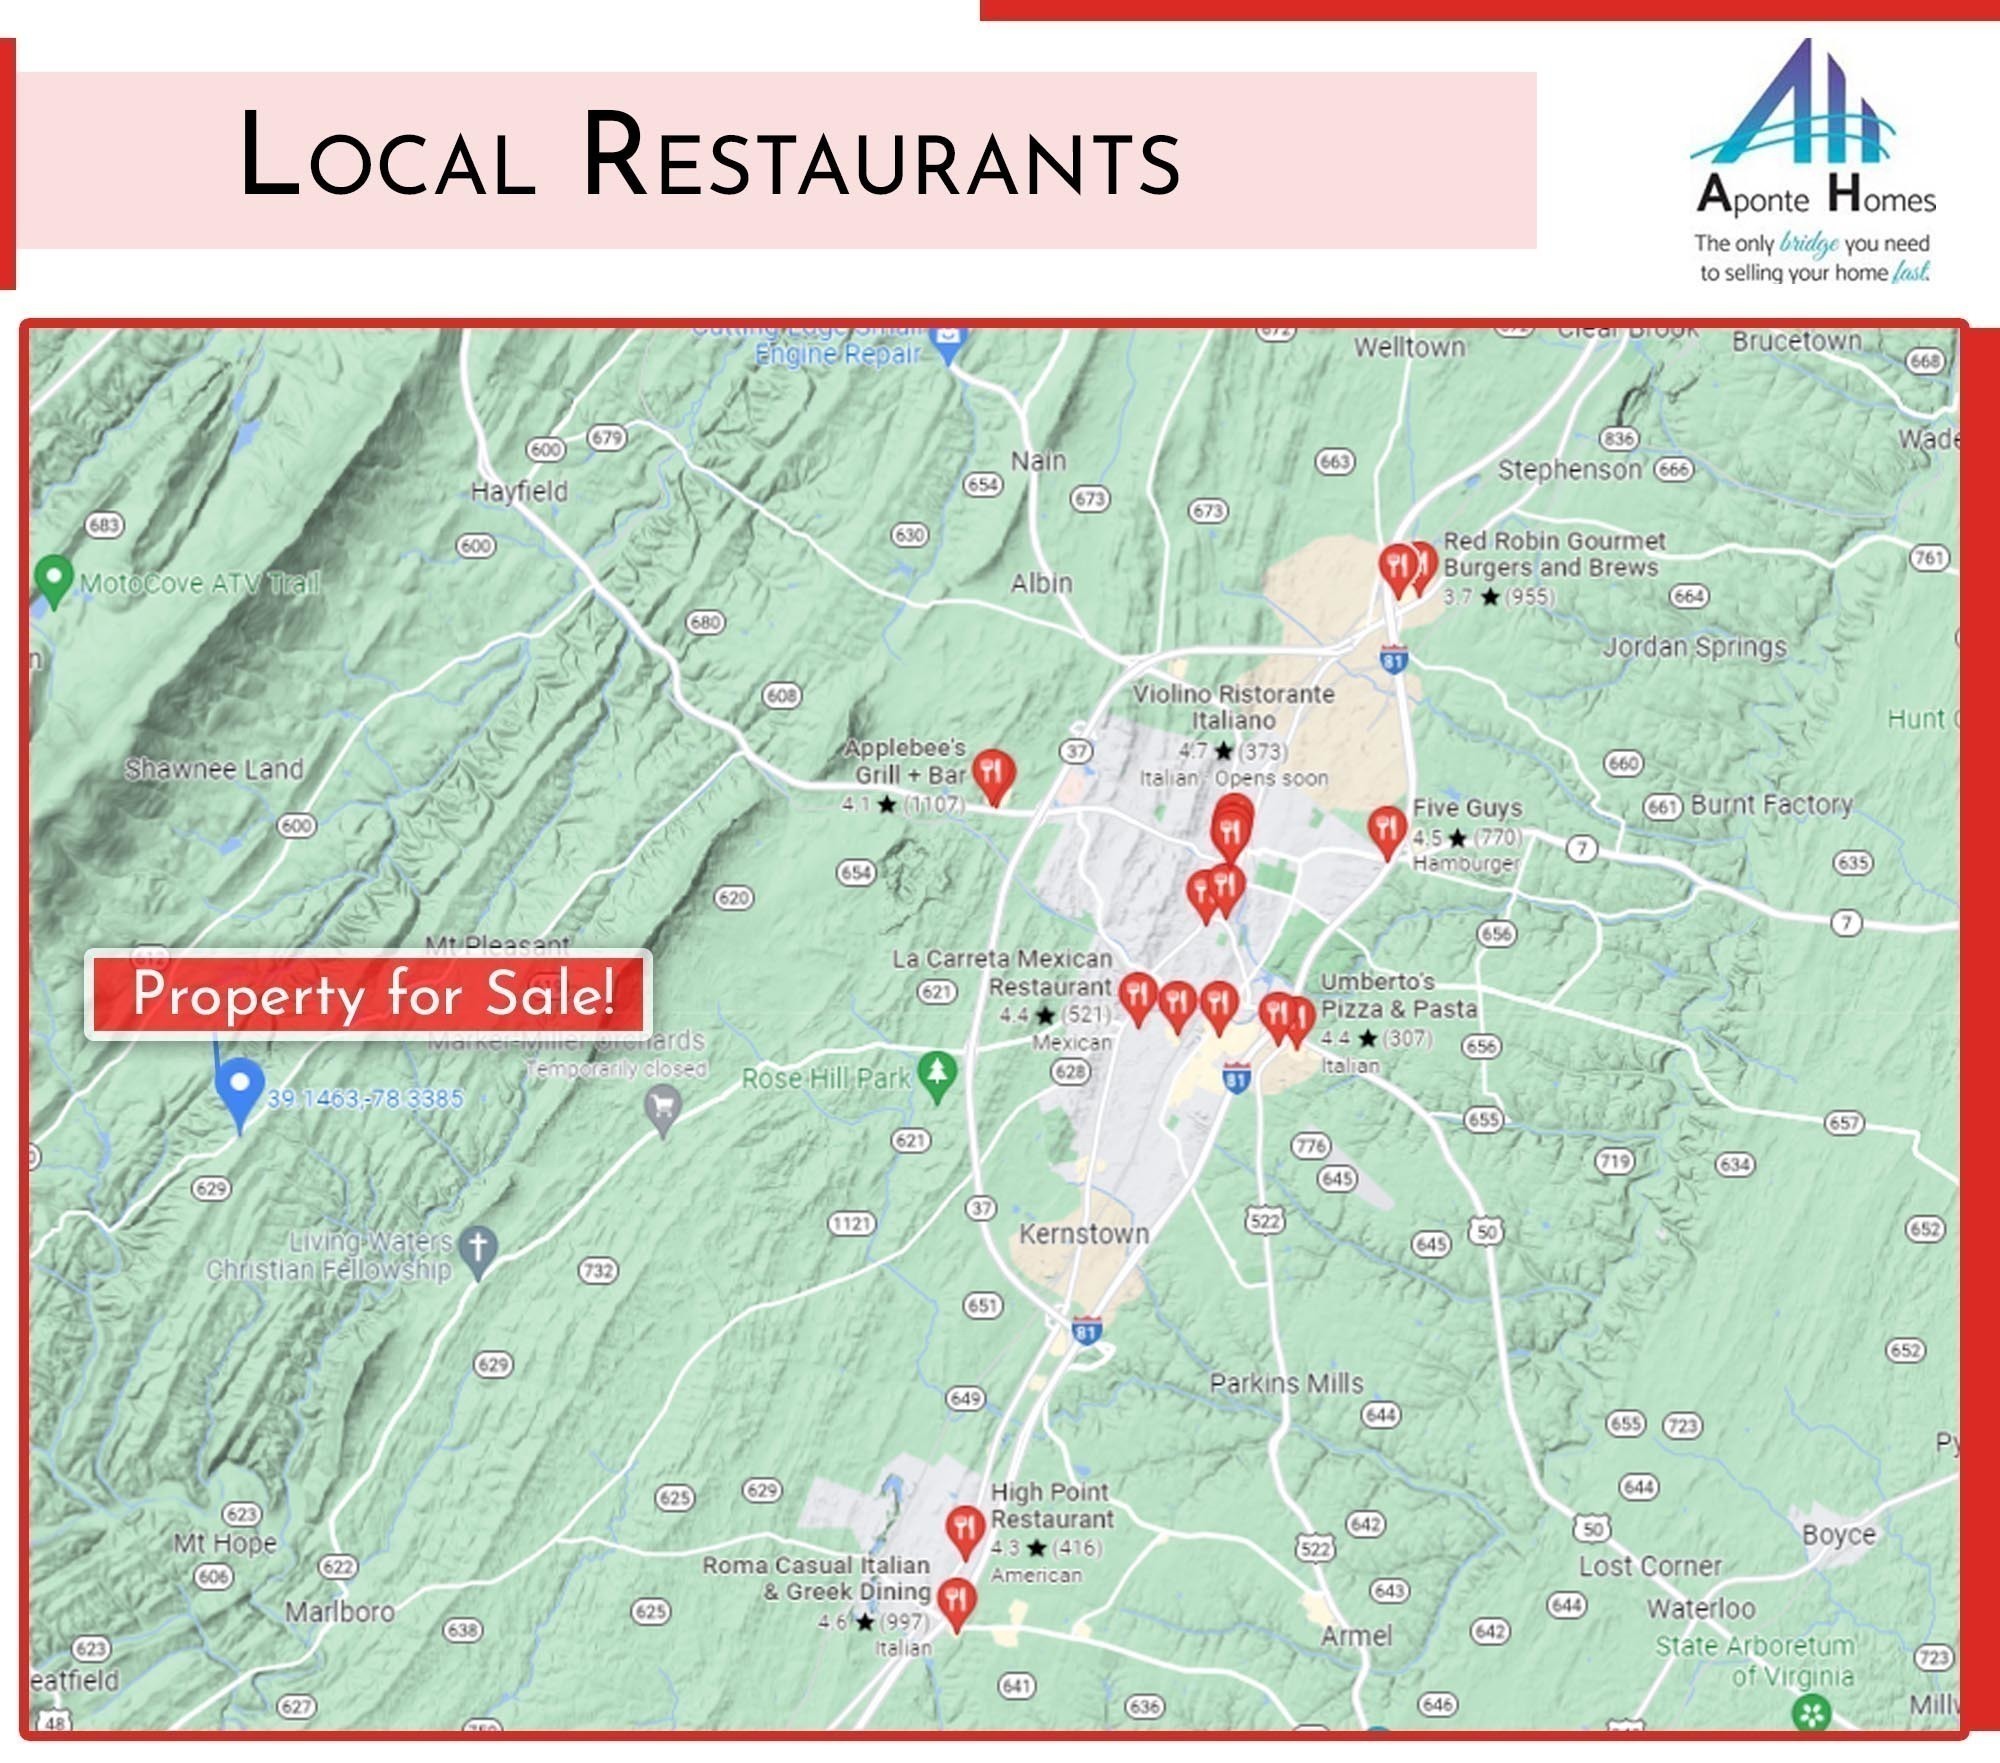 Local Restaurants